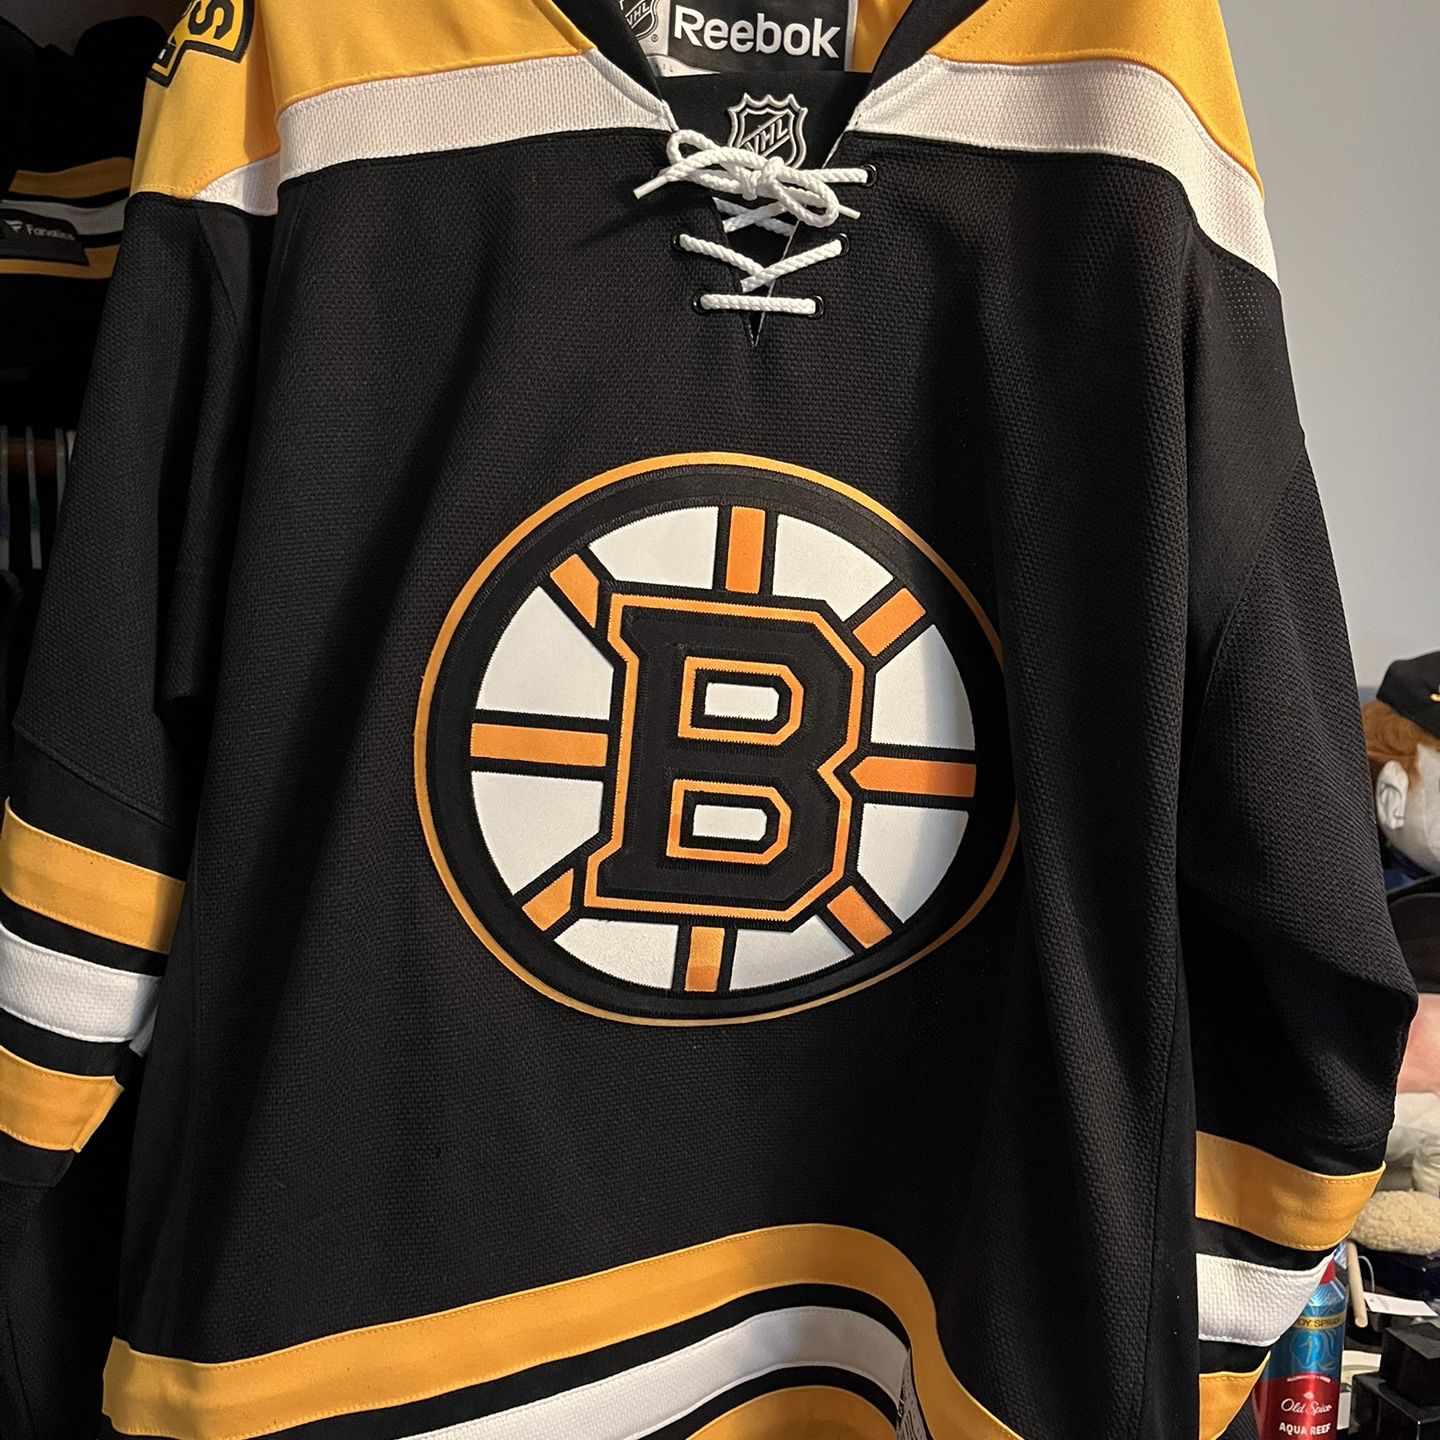 NEW W/ TAGS* Vintage Boston Bruins Jersey Sz M for Sale in Danville, CA -  OfferUp